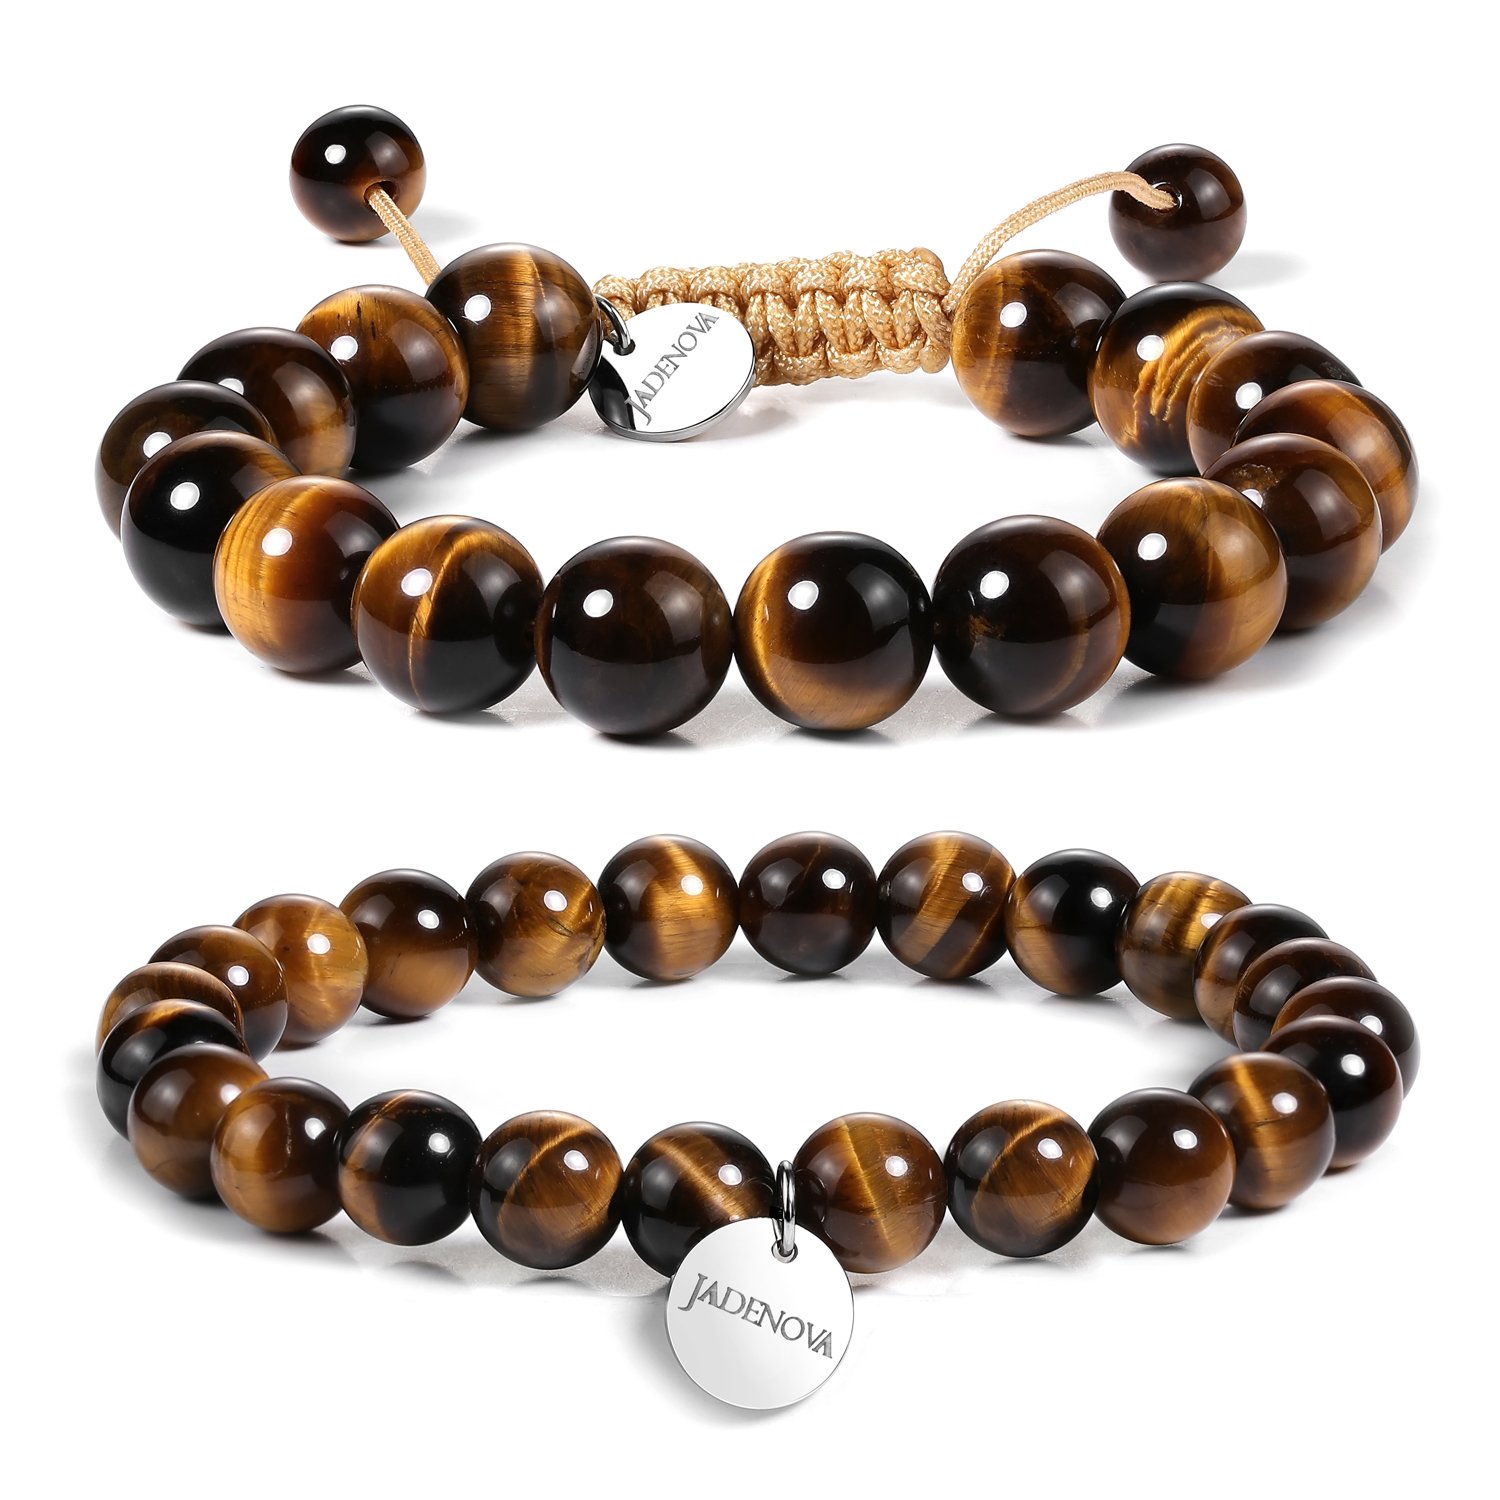 Buy Black Lava Stone 7 Chakra Bracelets 6pcs Mix 8mm Yinyang Rock Bead  Elastic Natural Stones Gemstones Oil Diffuser Yoga Beads Bracelets for Men  Women Girls Jewelry (6pcs Lava Stone Bracelet) at